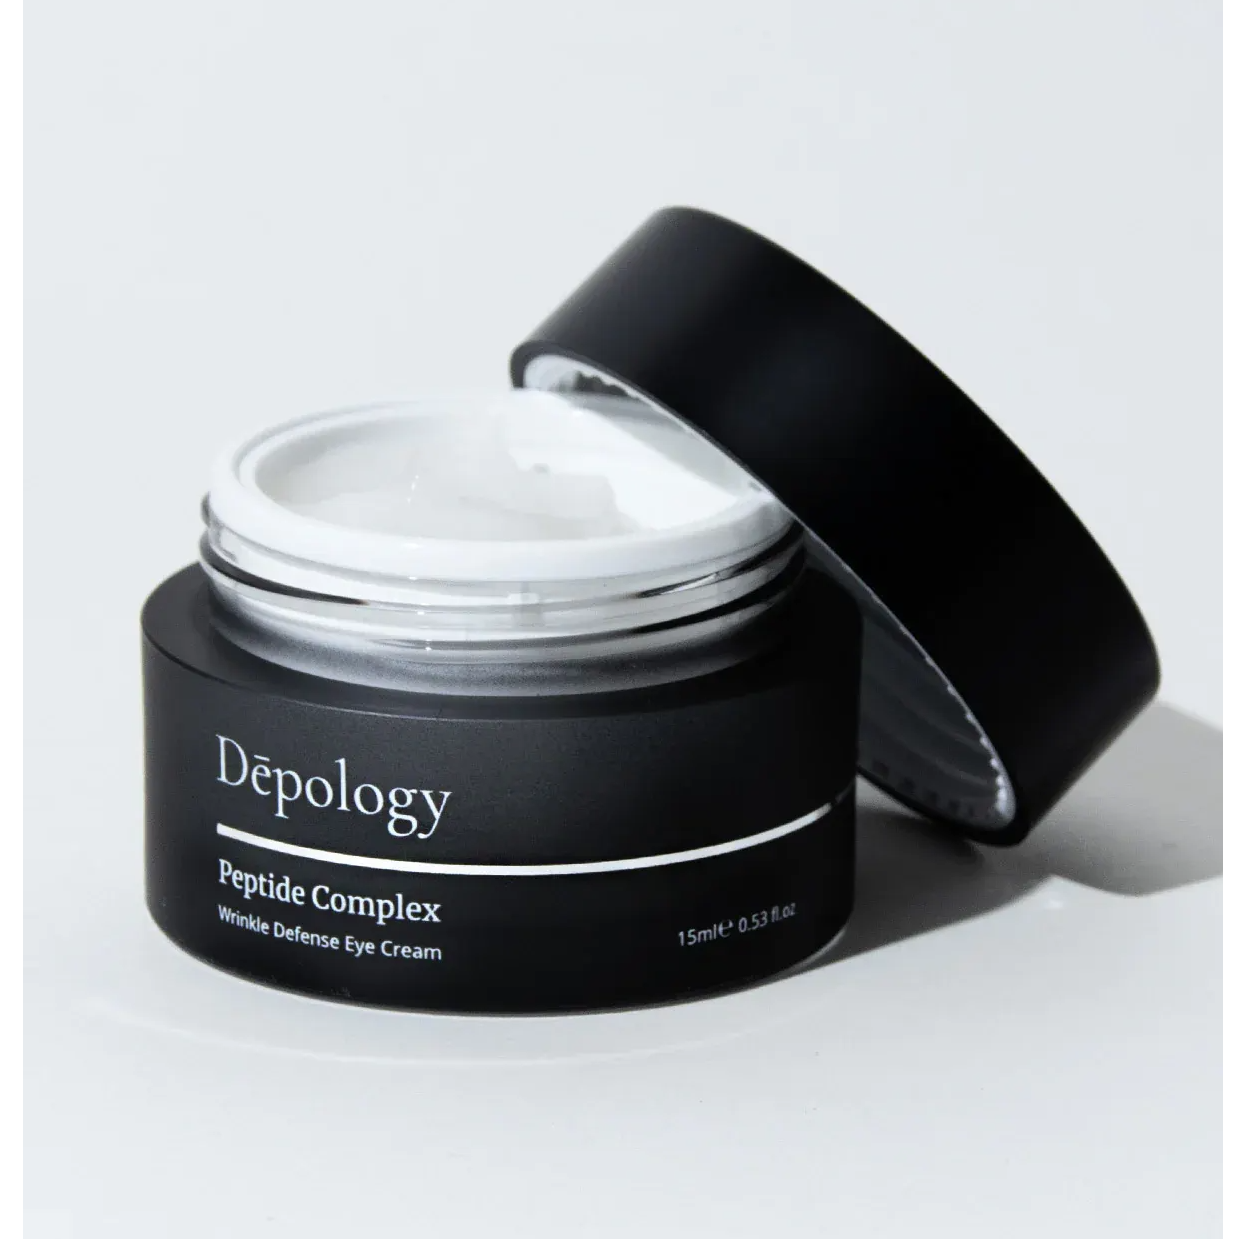 Peptide Complex Wrinkle defense eye cream for aging skin